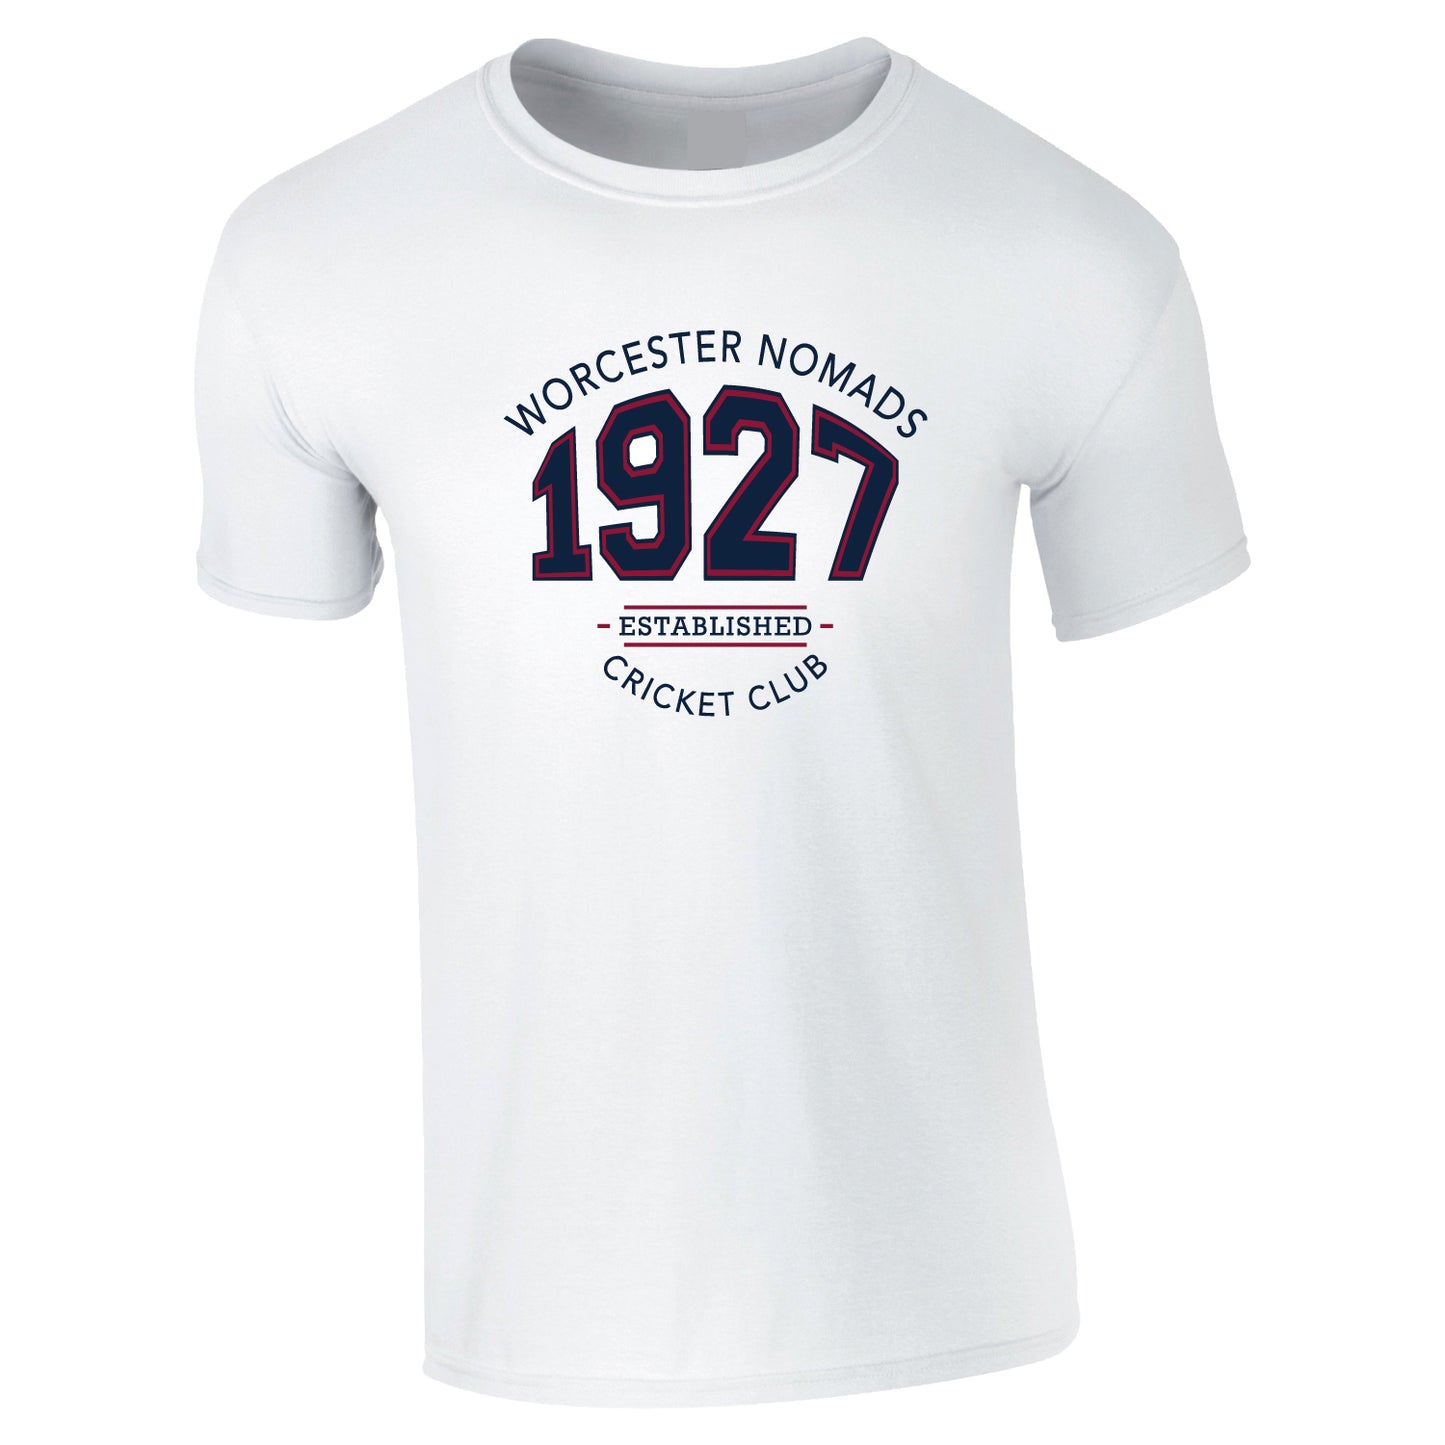 Worcester Nomads Cricket Club 1927 T-Shirt